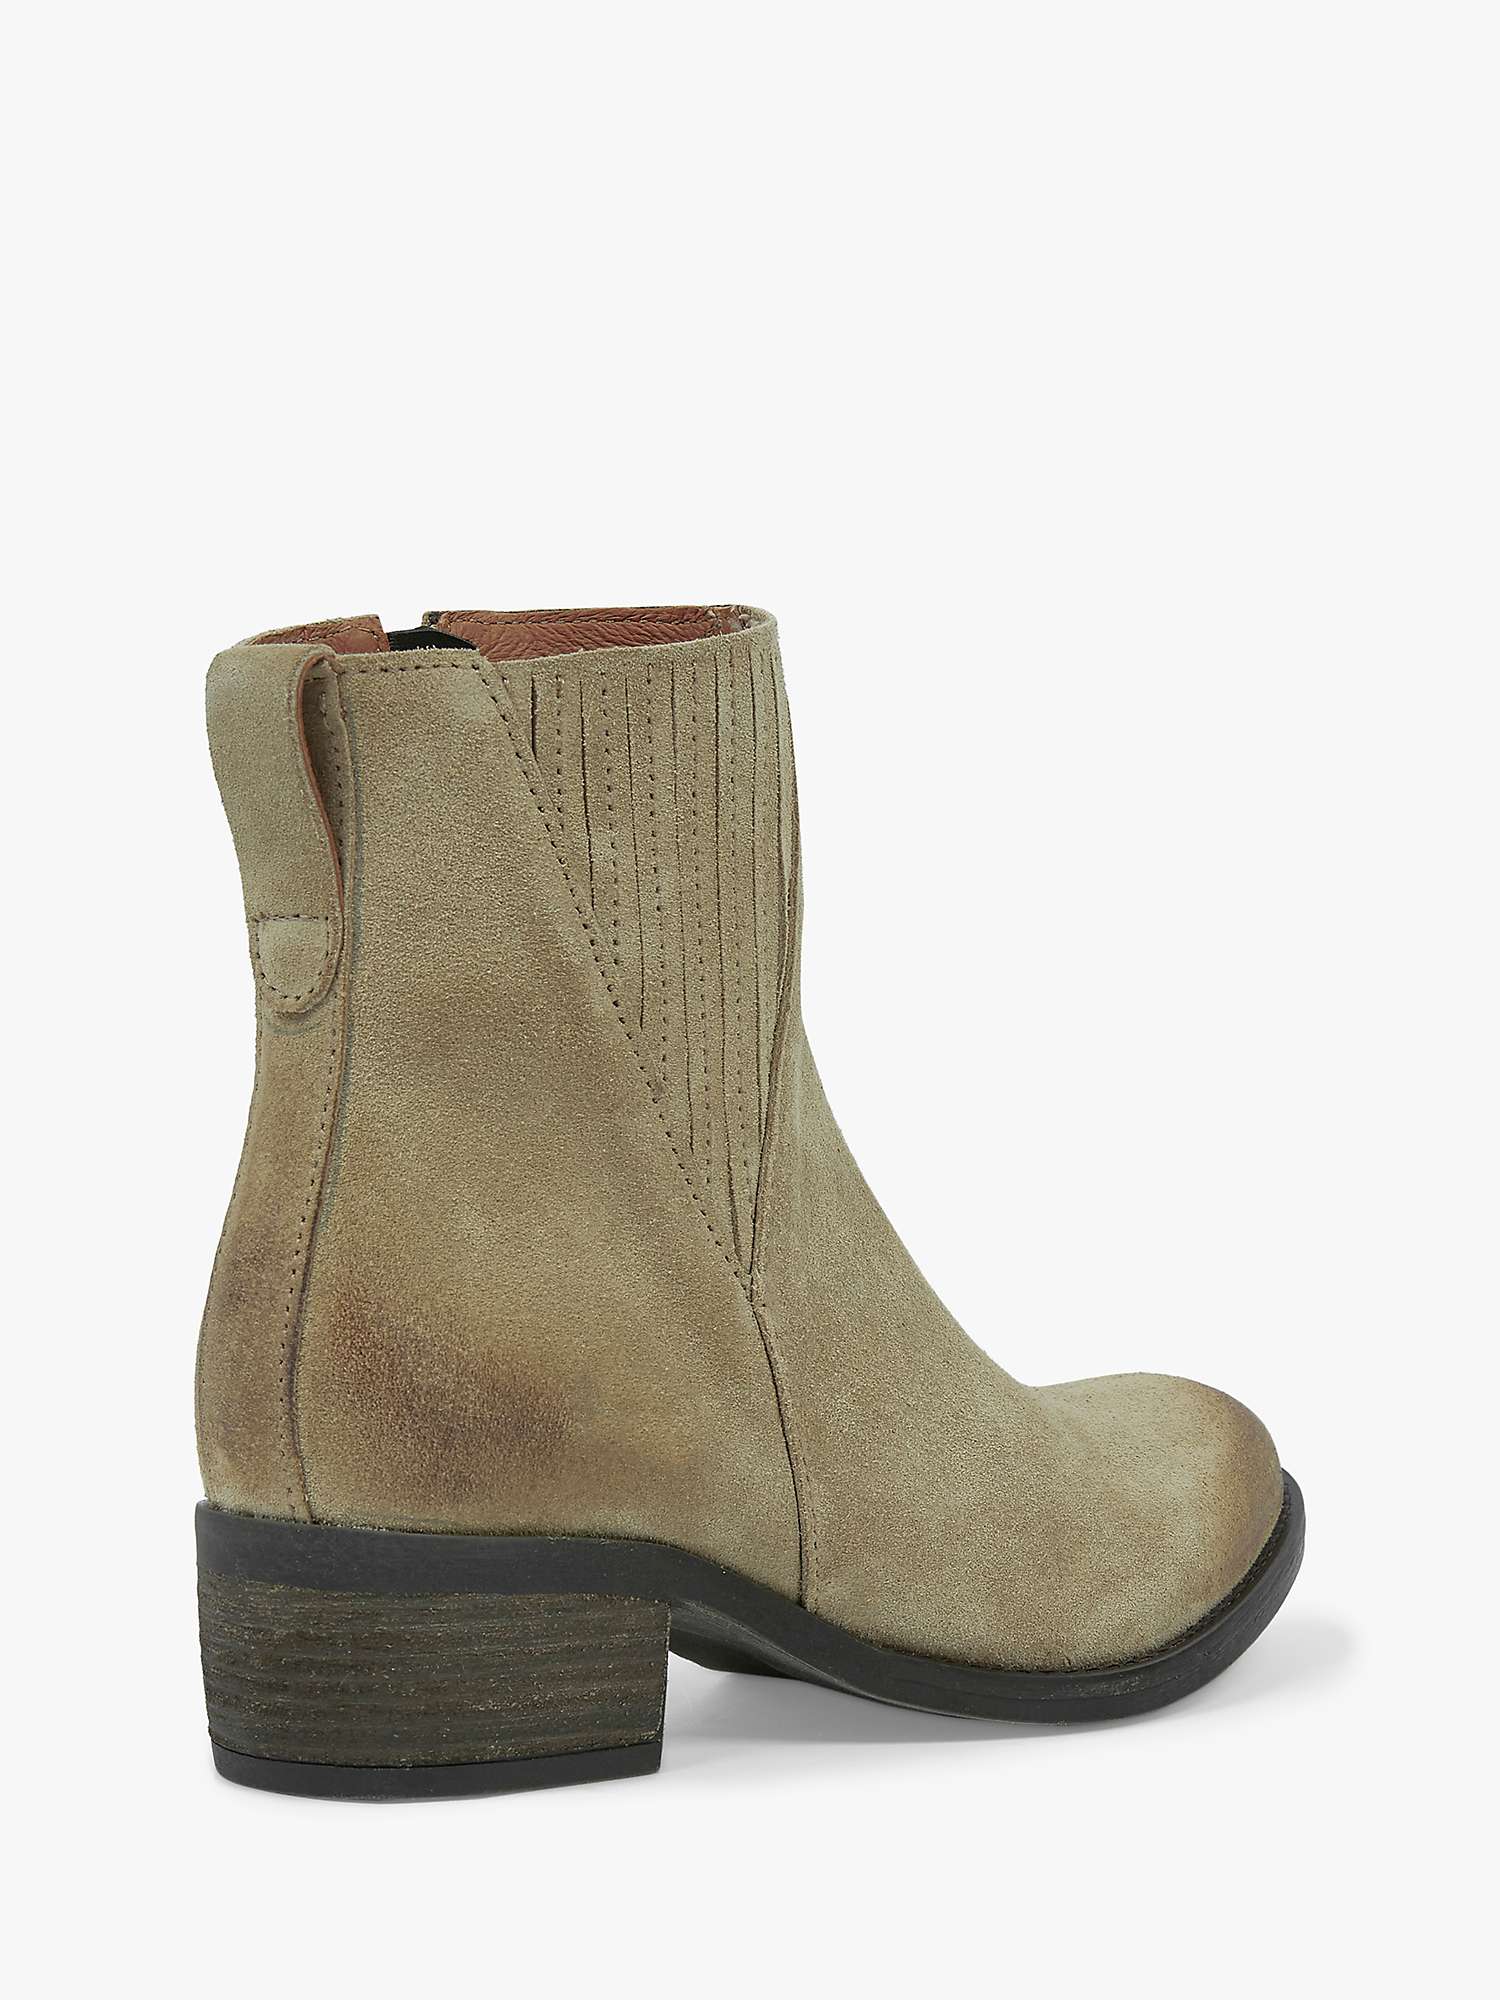 Buy Celtic & Co. Western Suede Ankle Boots, Camel Online at johnlewis.com